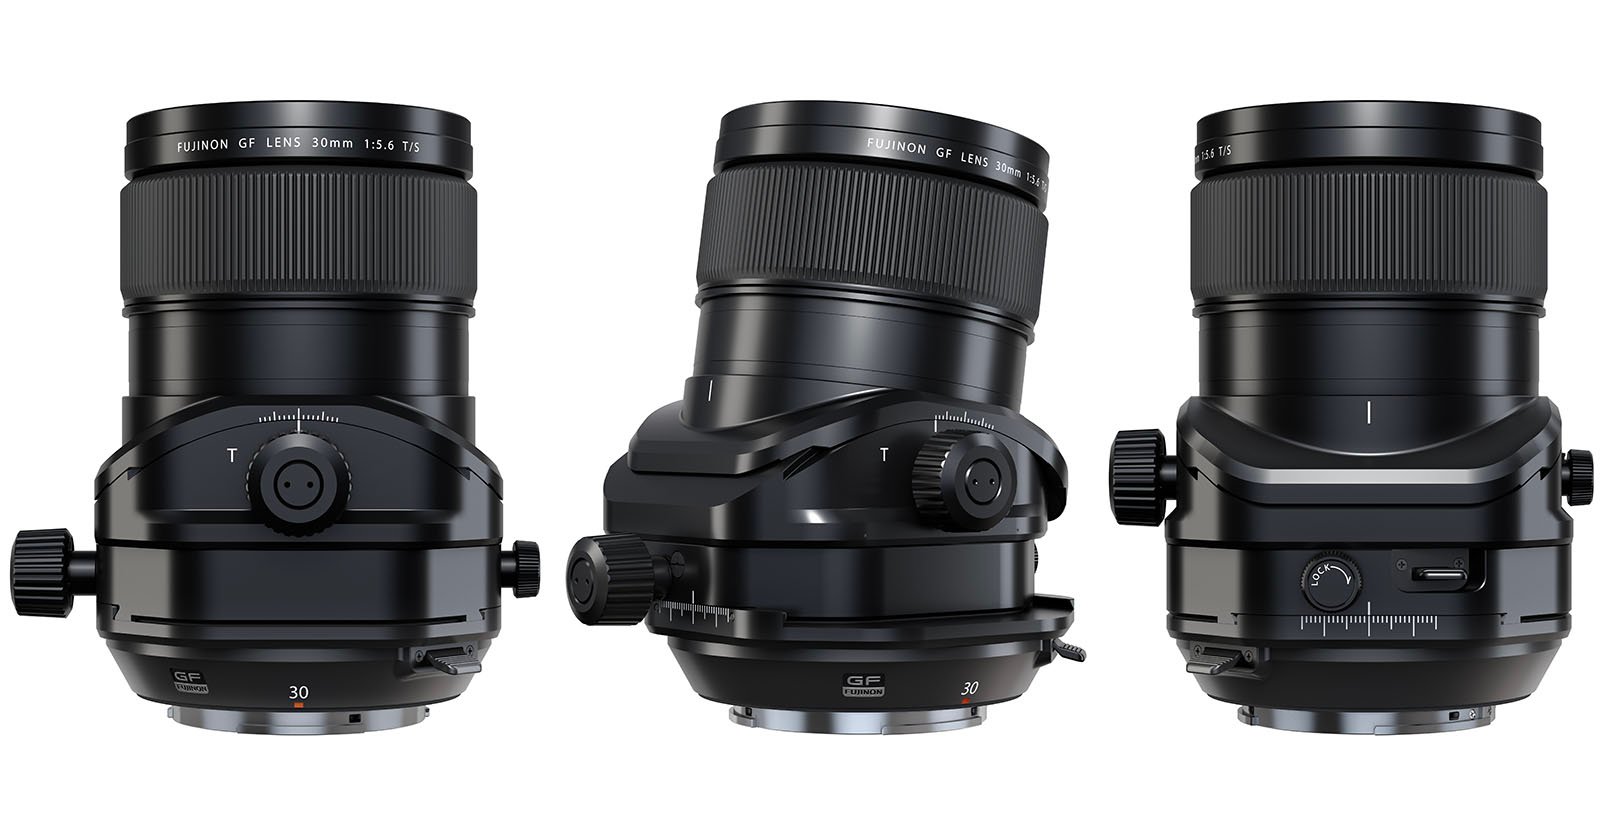 Fujis GF 24mm and 110mm Tilt/Shift Lenses Offer Control and Versatility